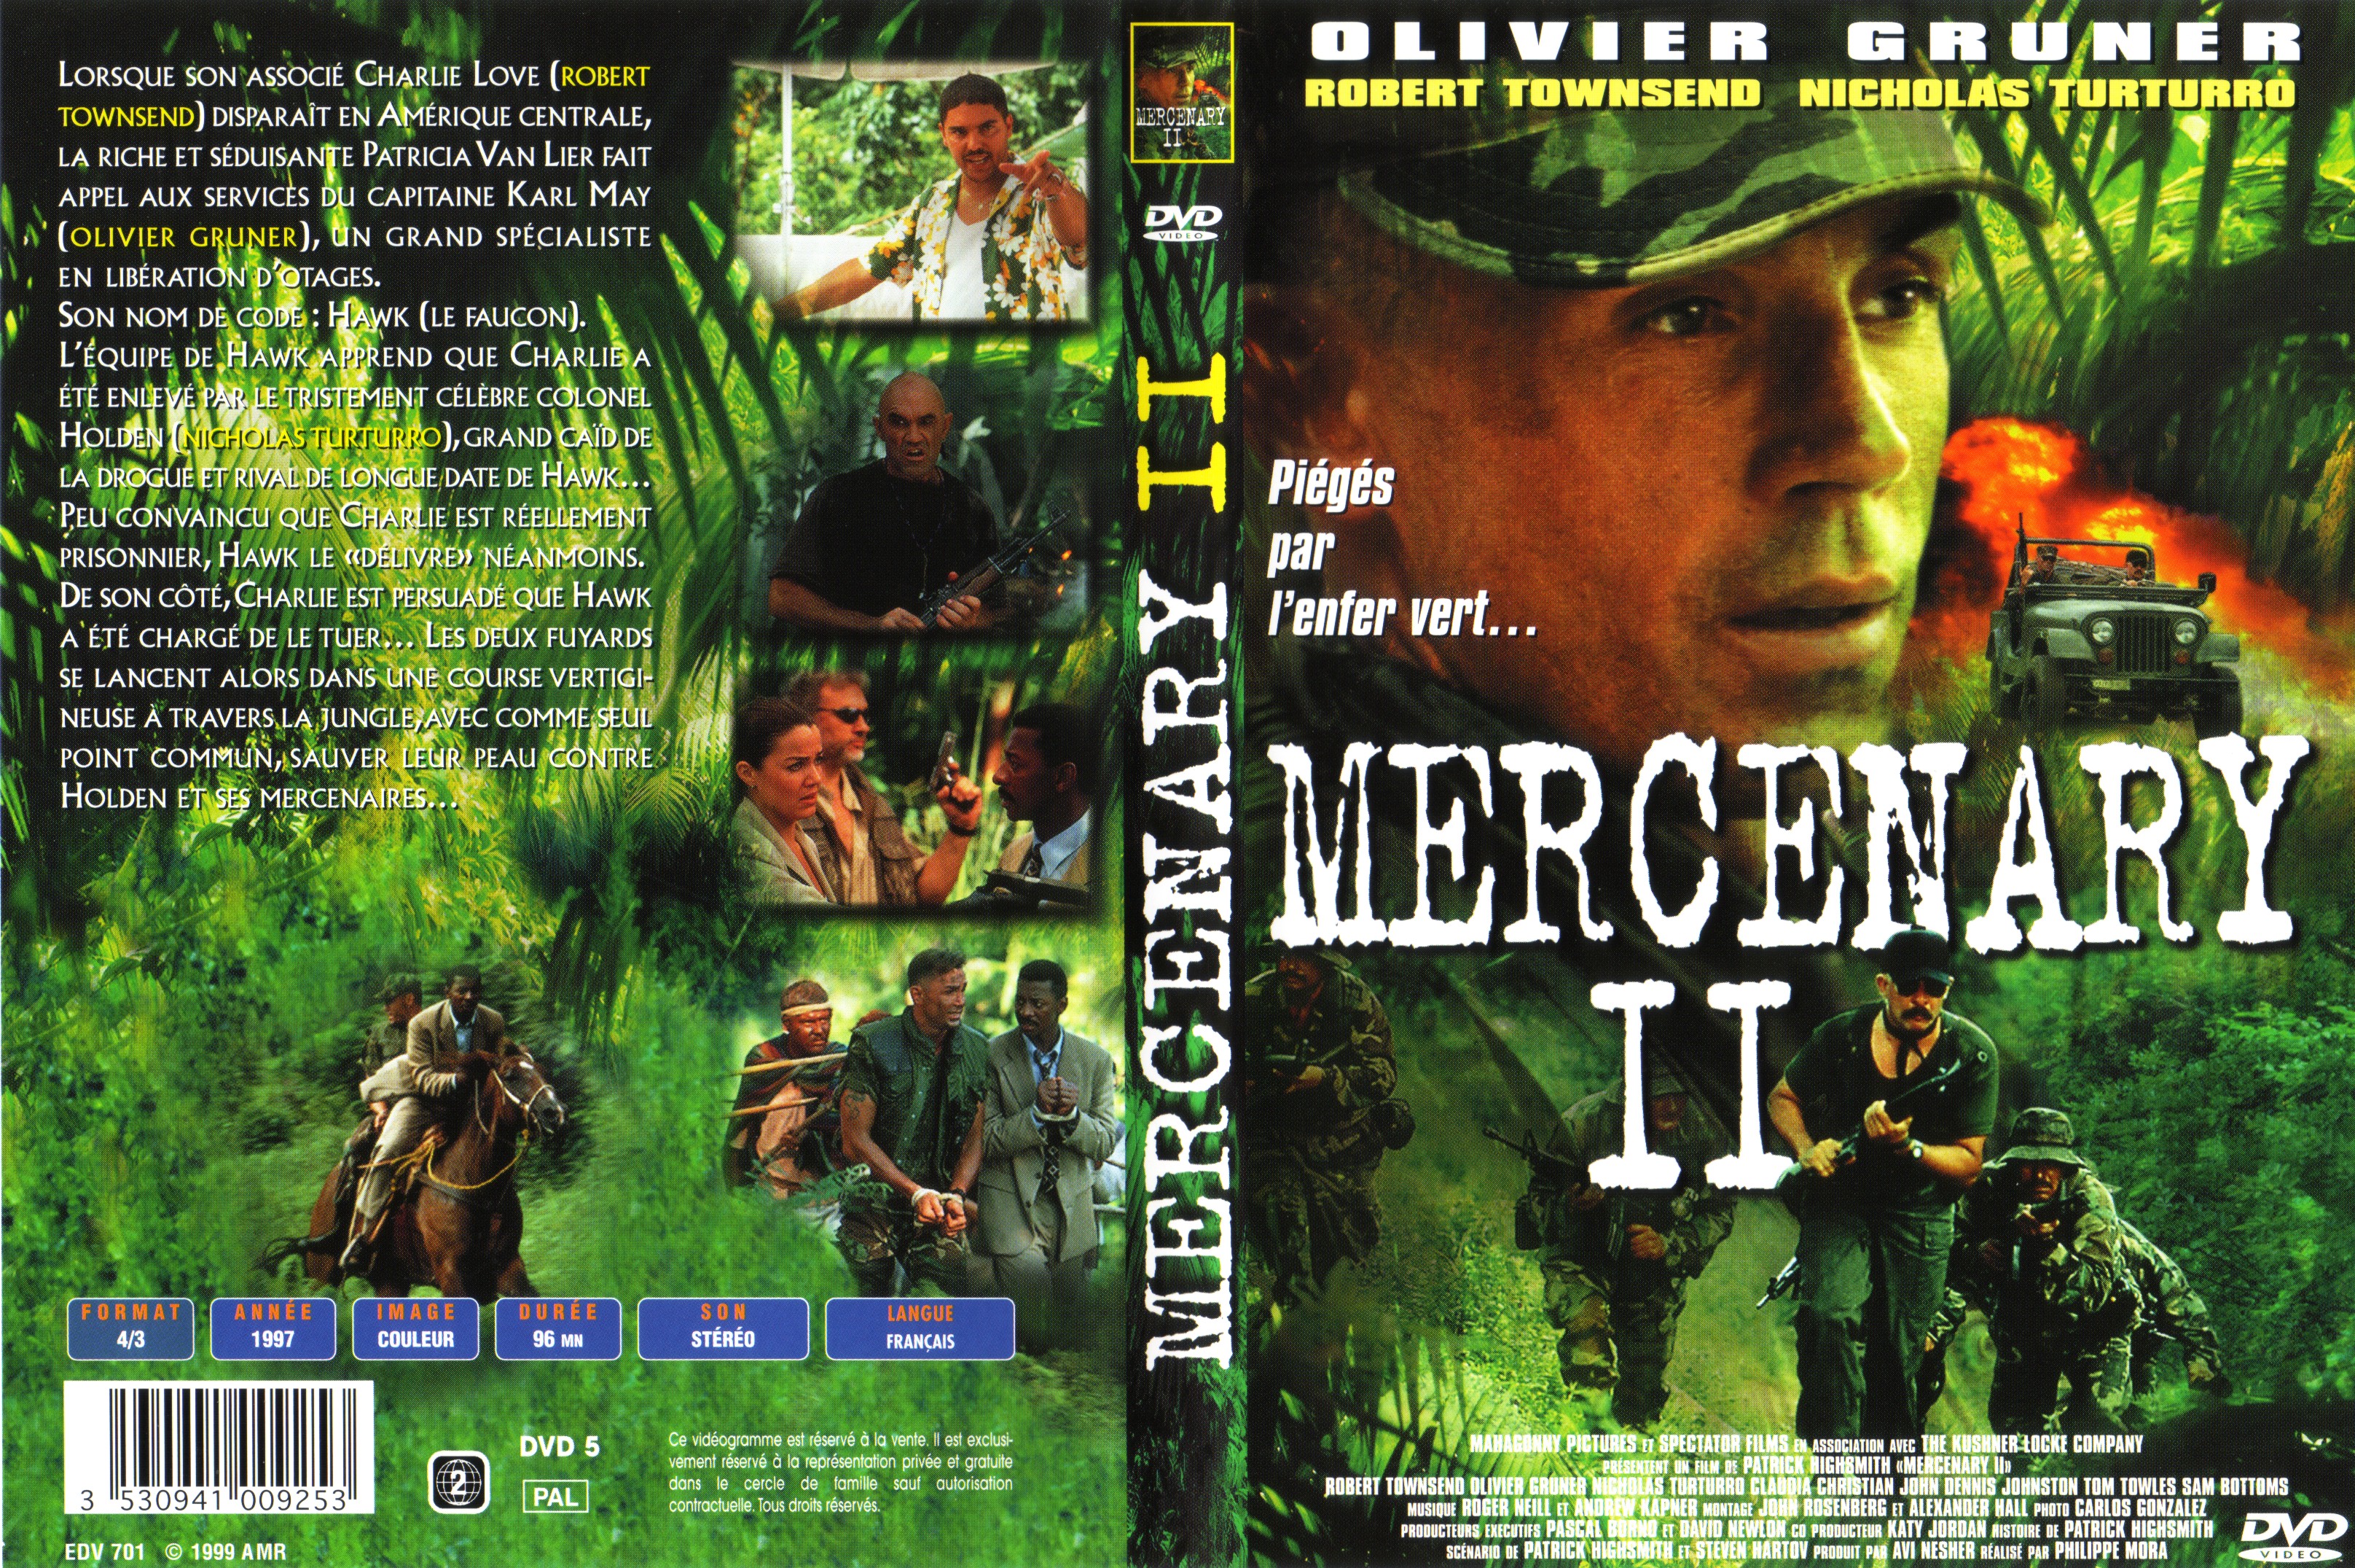 Jaquette DVD Mercenary 2